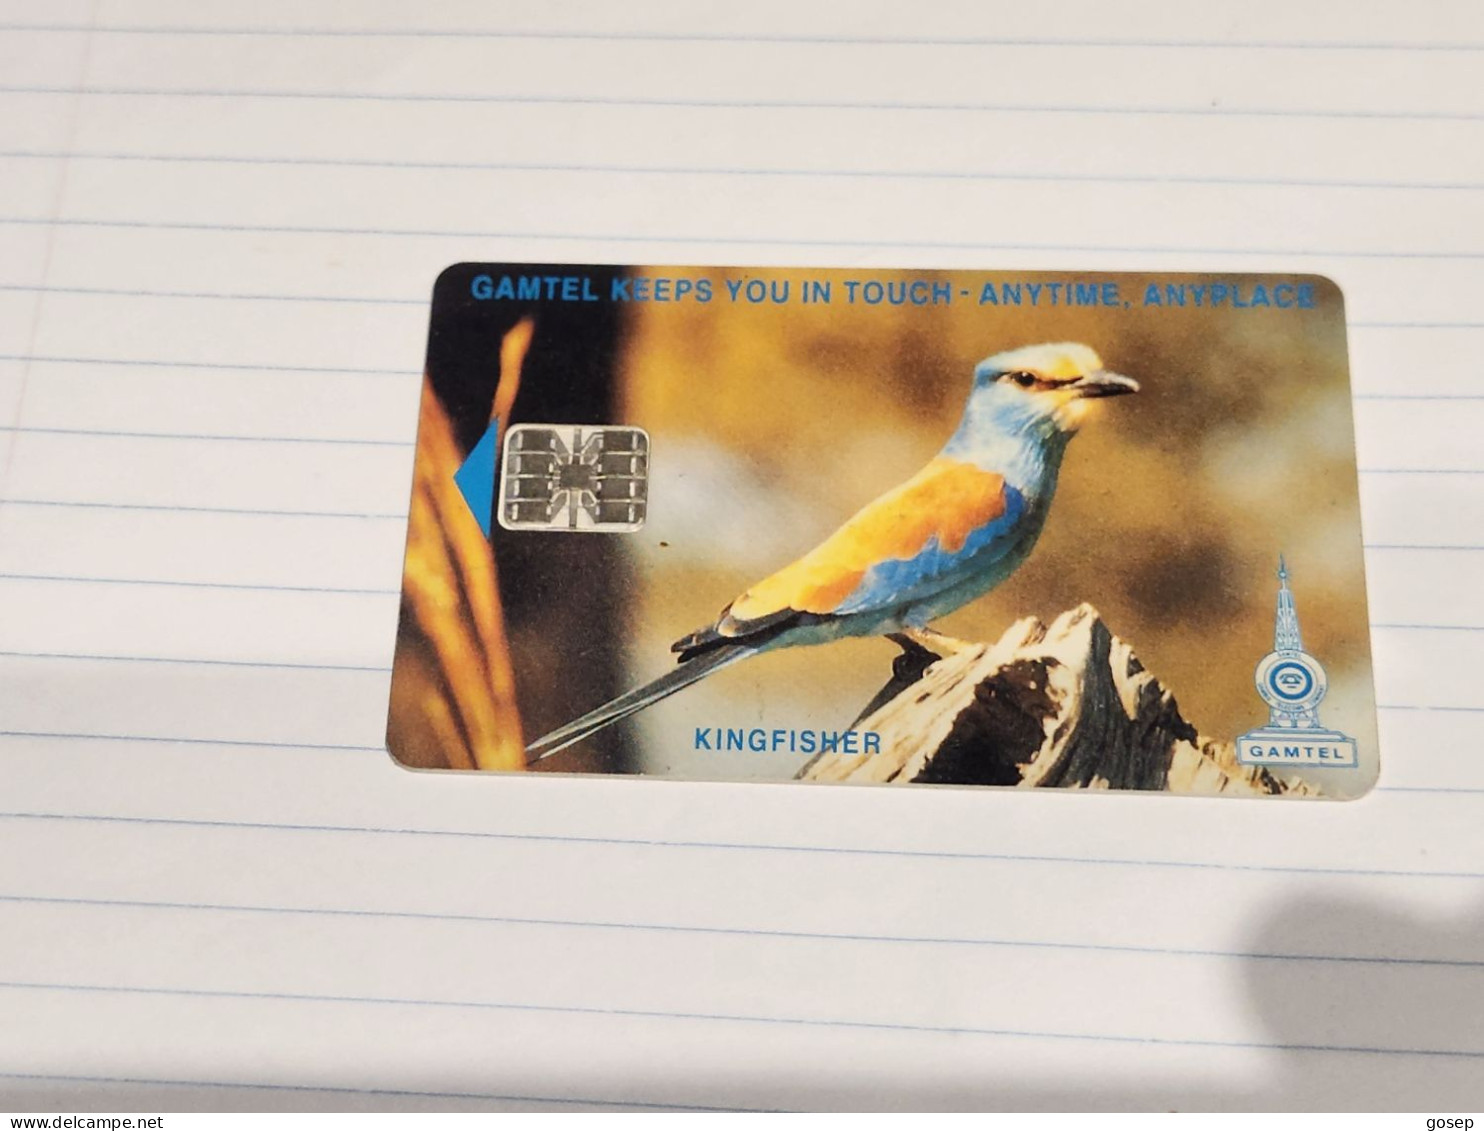 GAMBIA-(GAM-09)-Kingfisher (CN:C4Cxxxxxx)-(8)-(125units)-(C4C148066)-used Card+1card Prepiad Free - Gambia